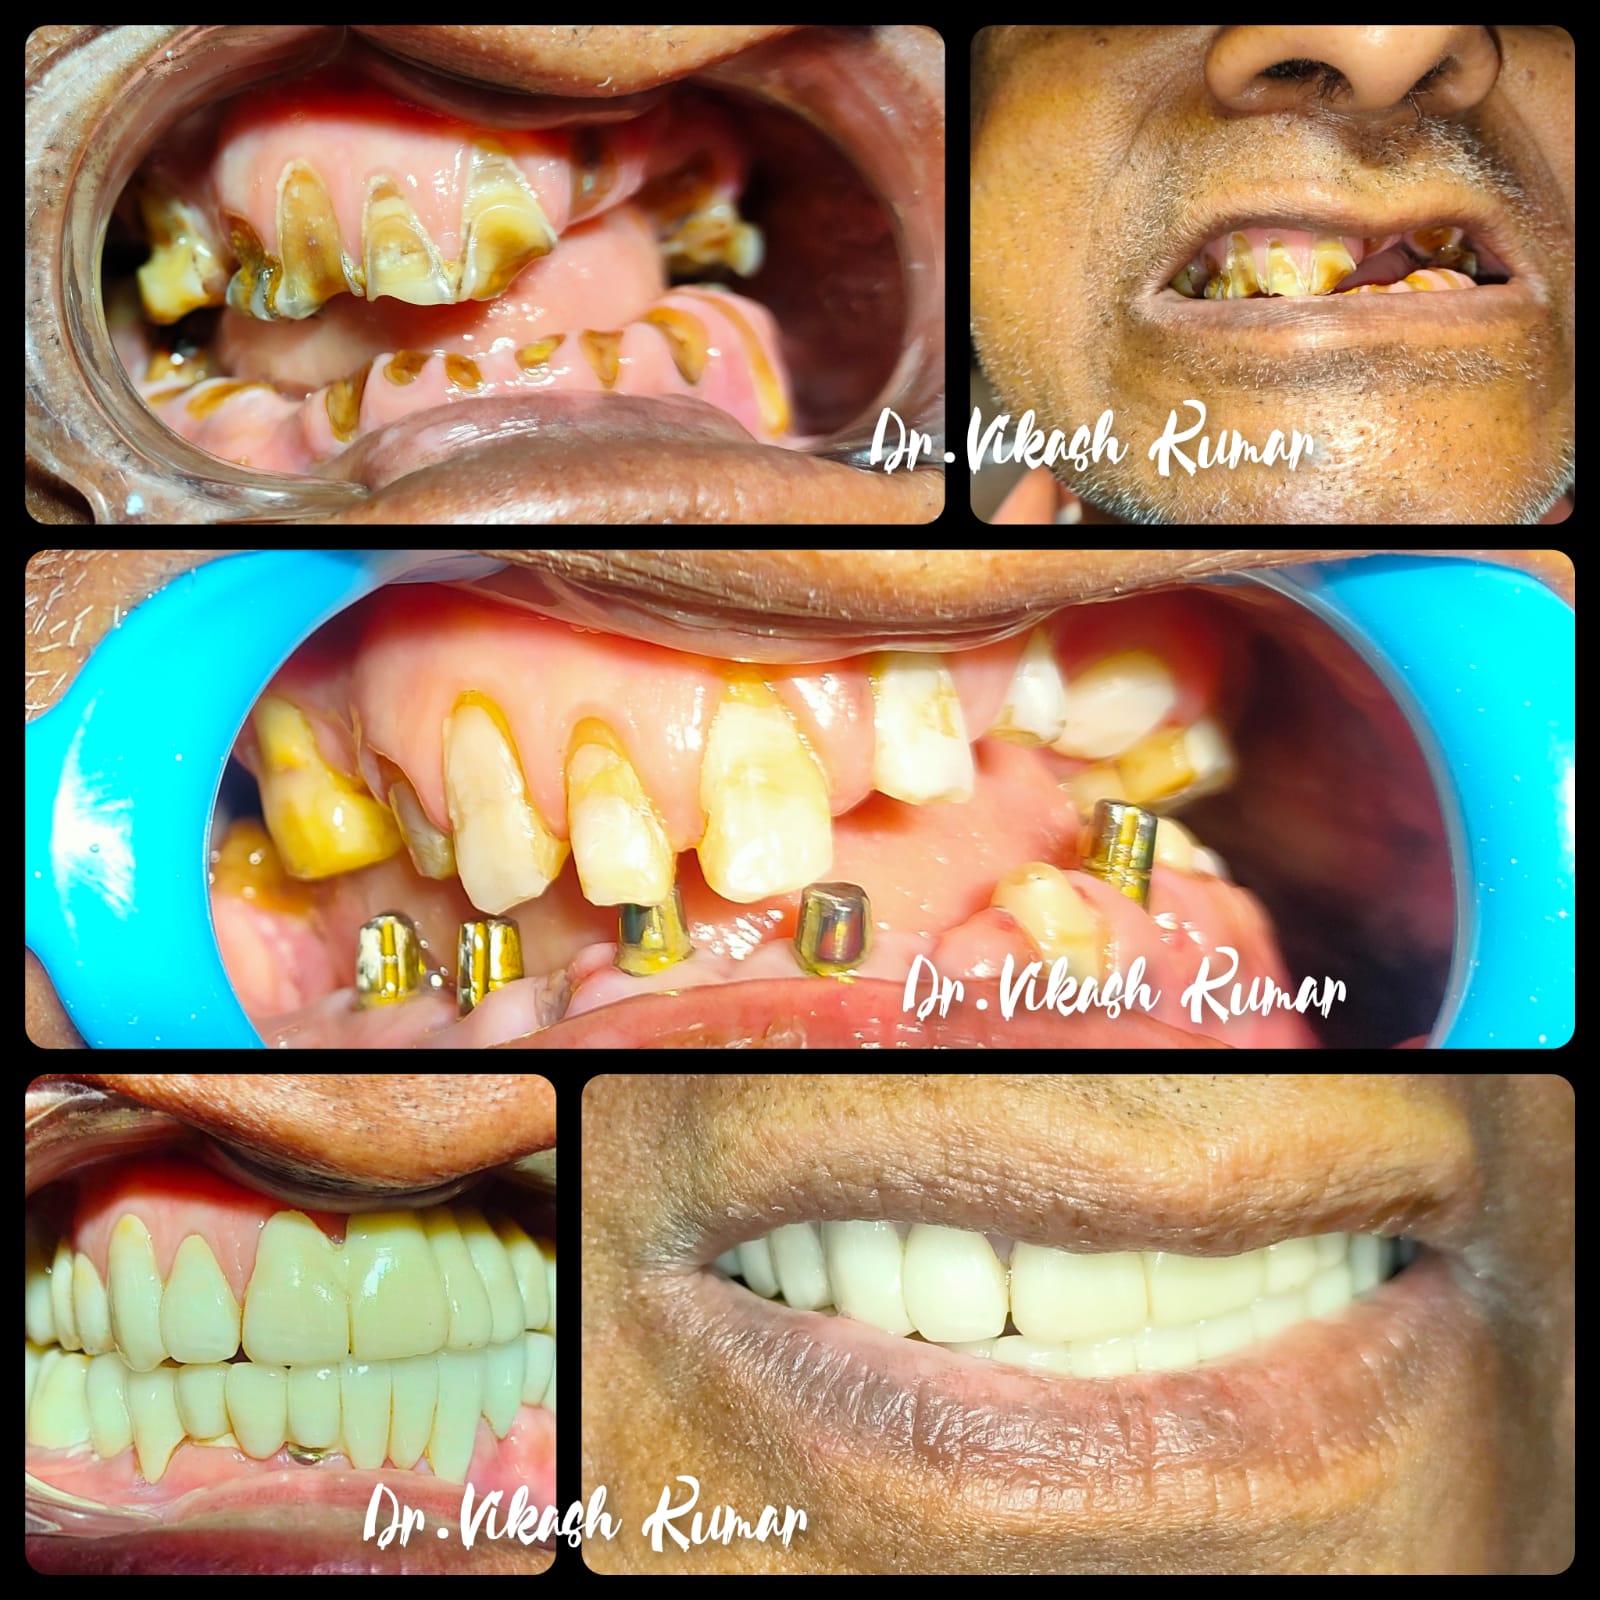 Dr. Vikash Ethical Dental Implant and Crown